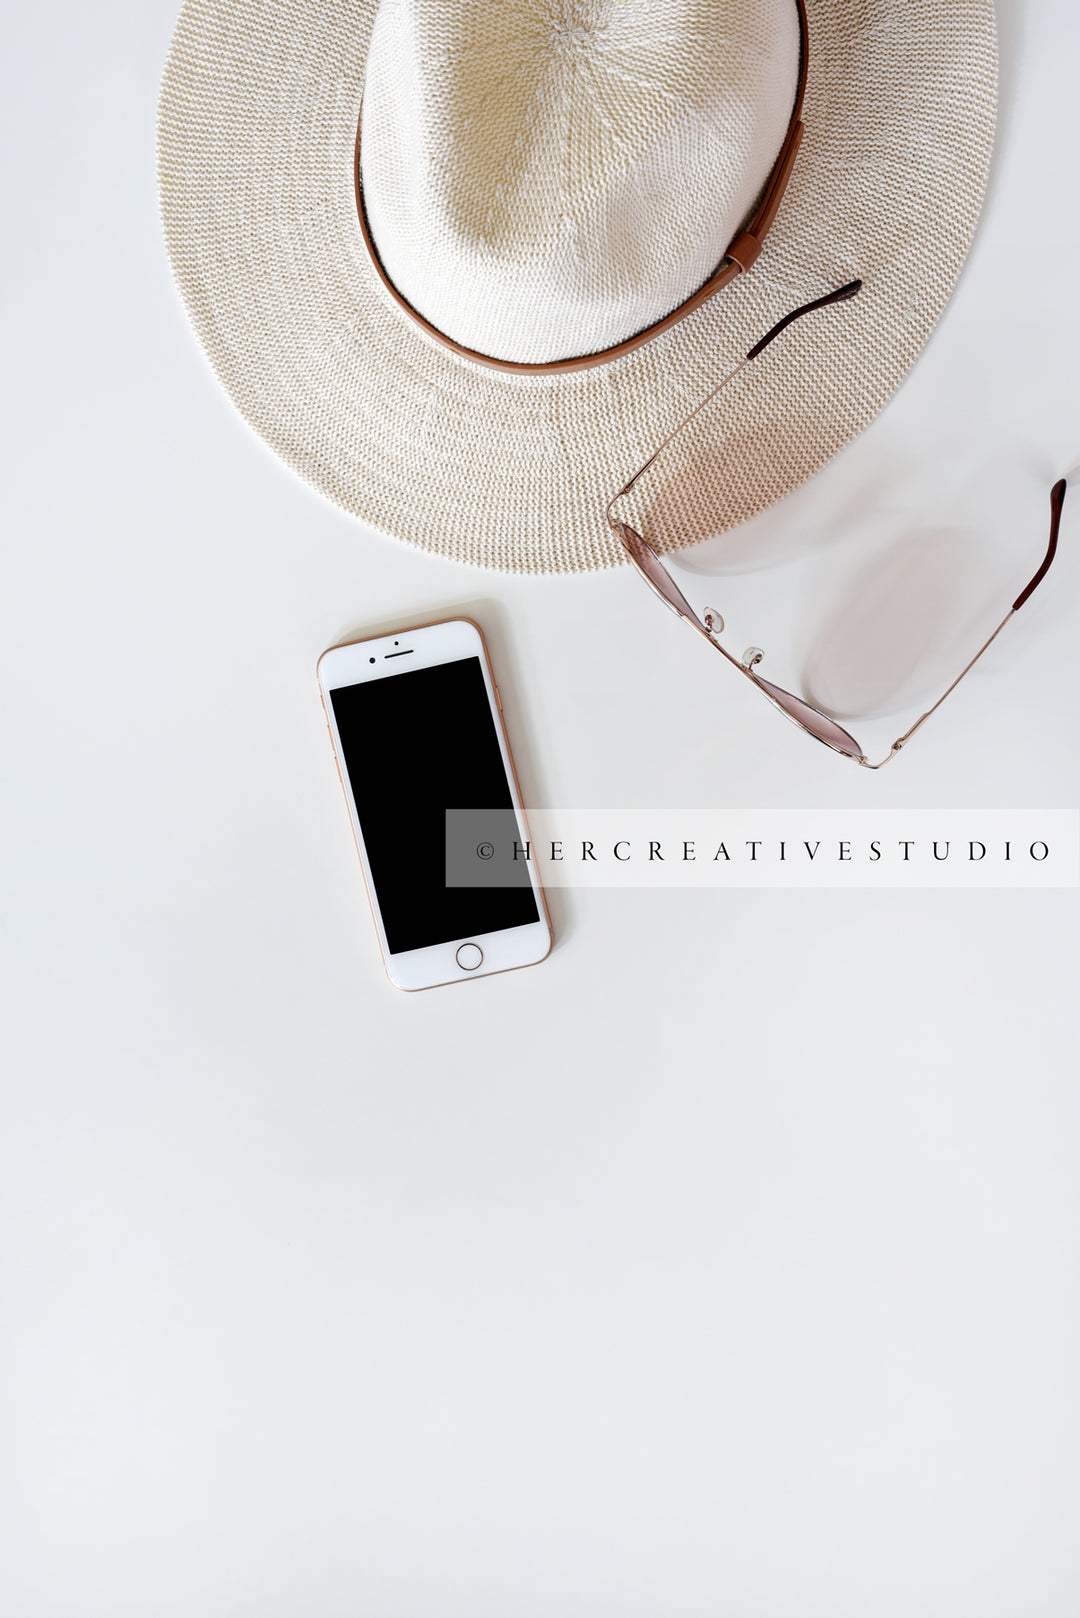 Panama Hat, Smartphone & Sunglasses, Styled Image